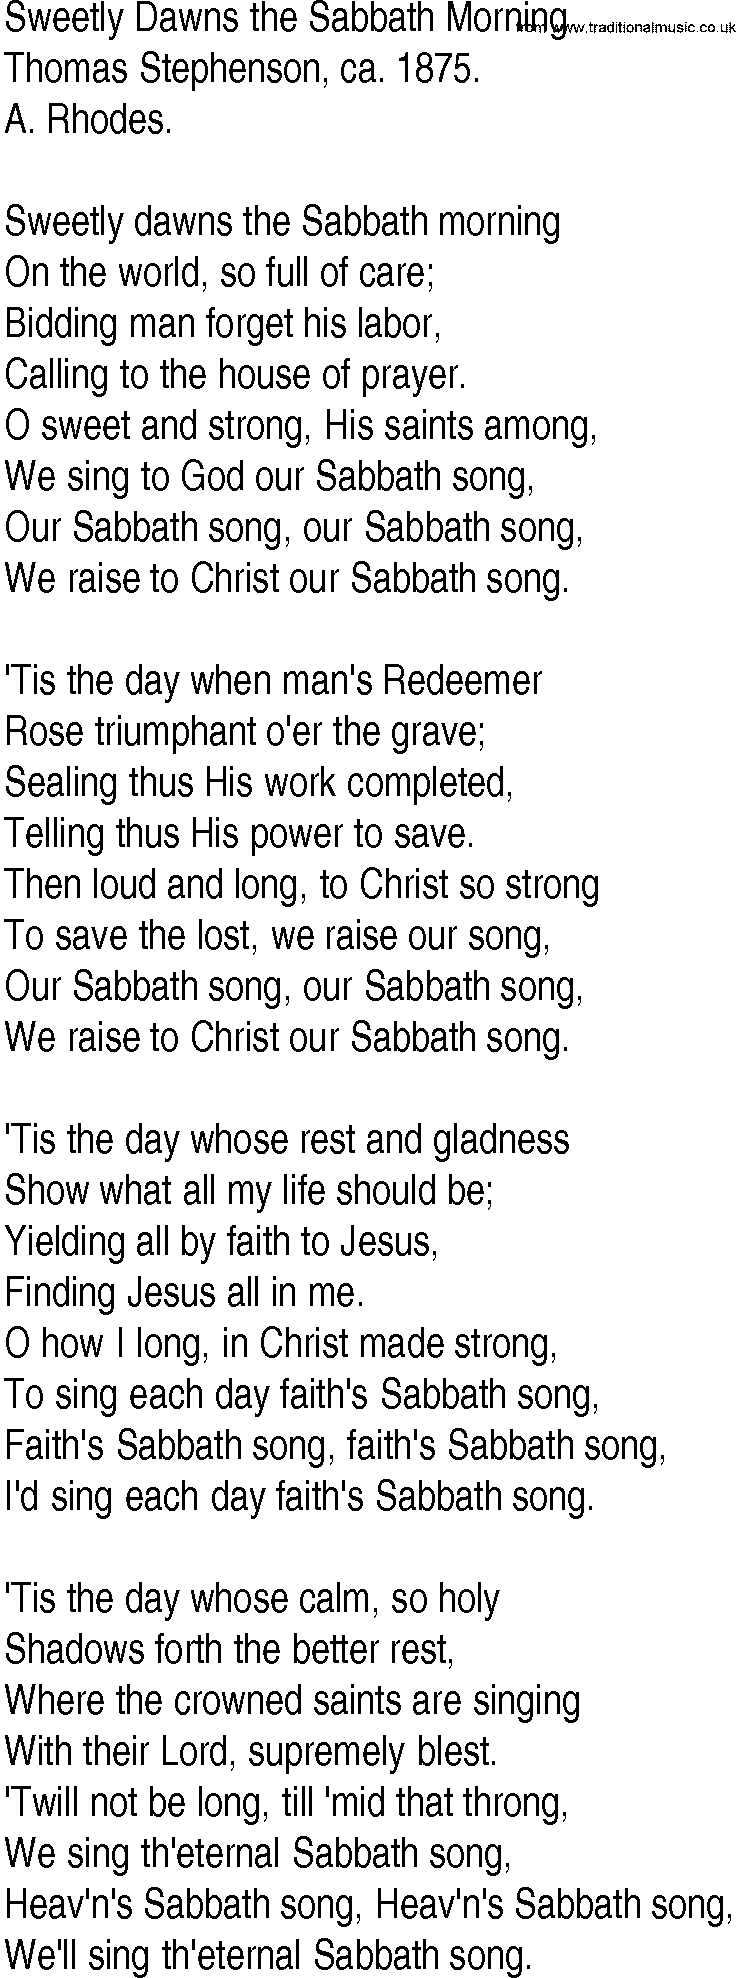 Hymn and Gospel Song: Sweetly Dawns the Sabbath Morning by Thomas Stephenson ca lyrics